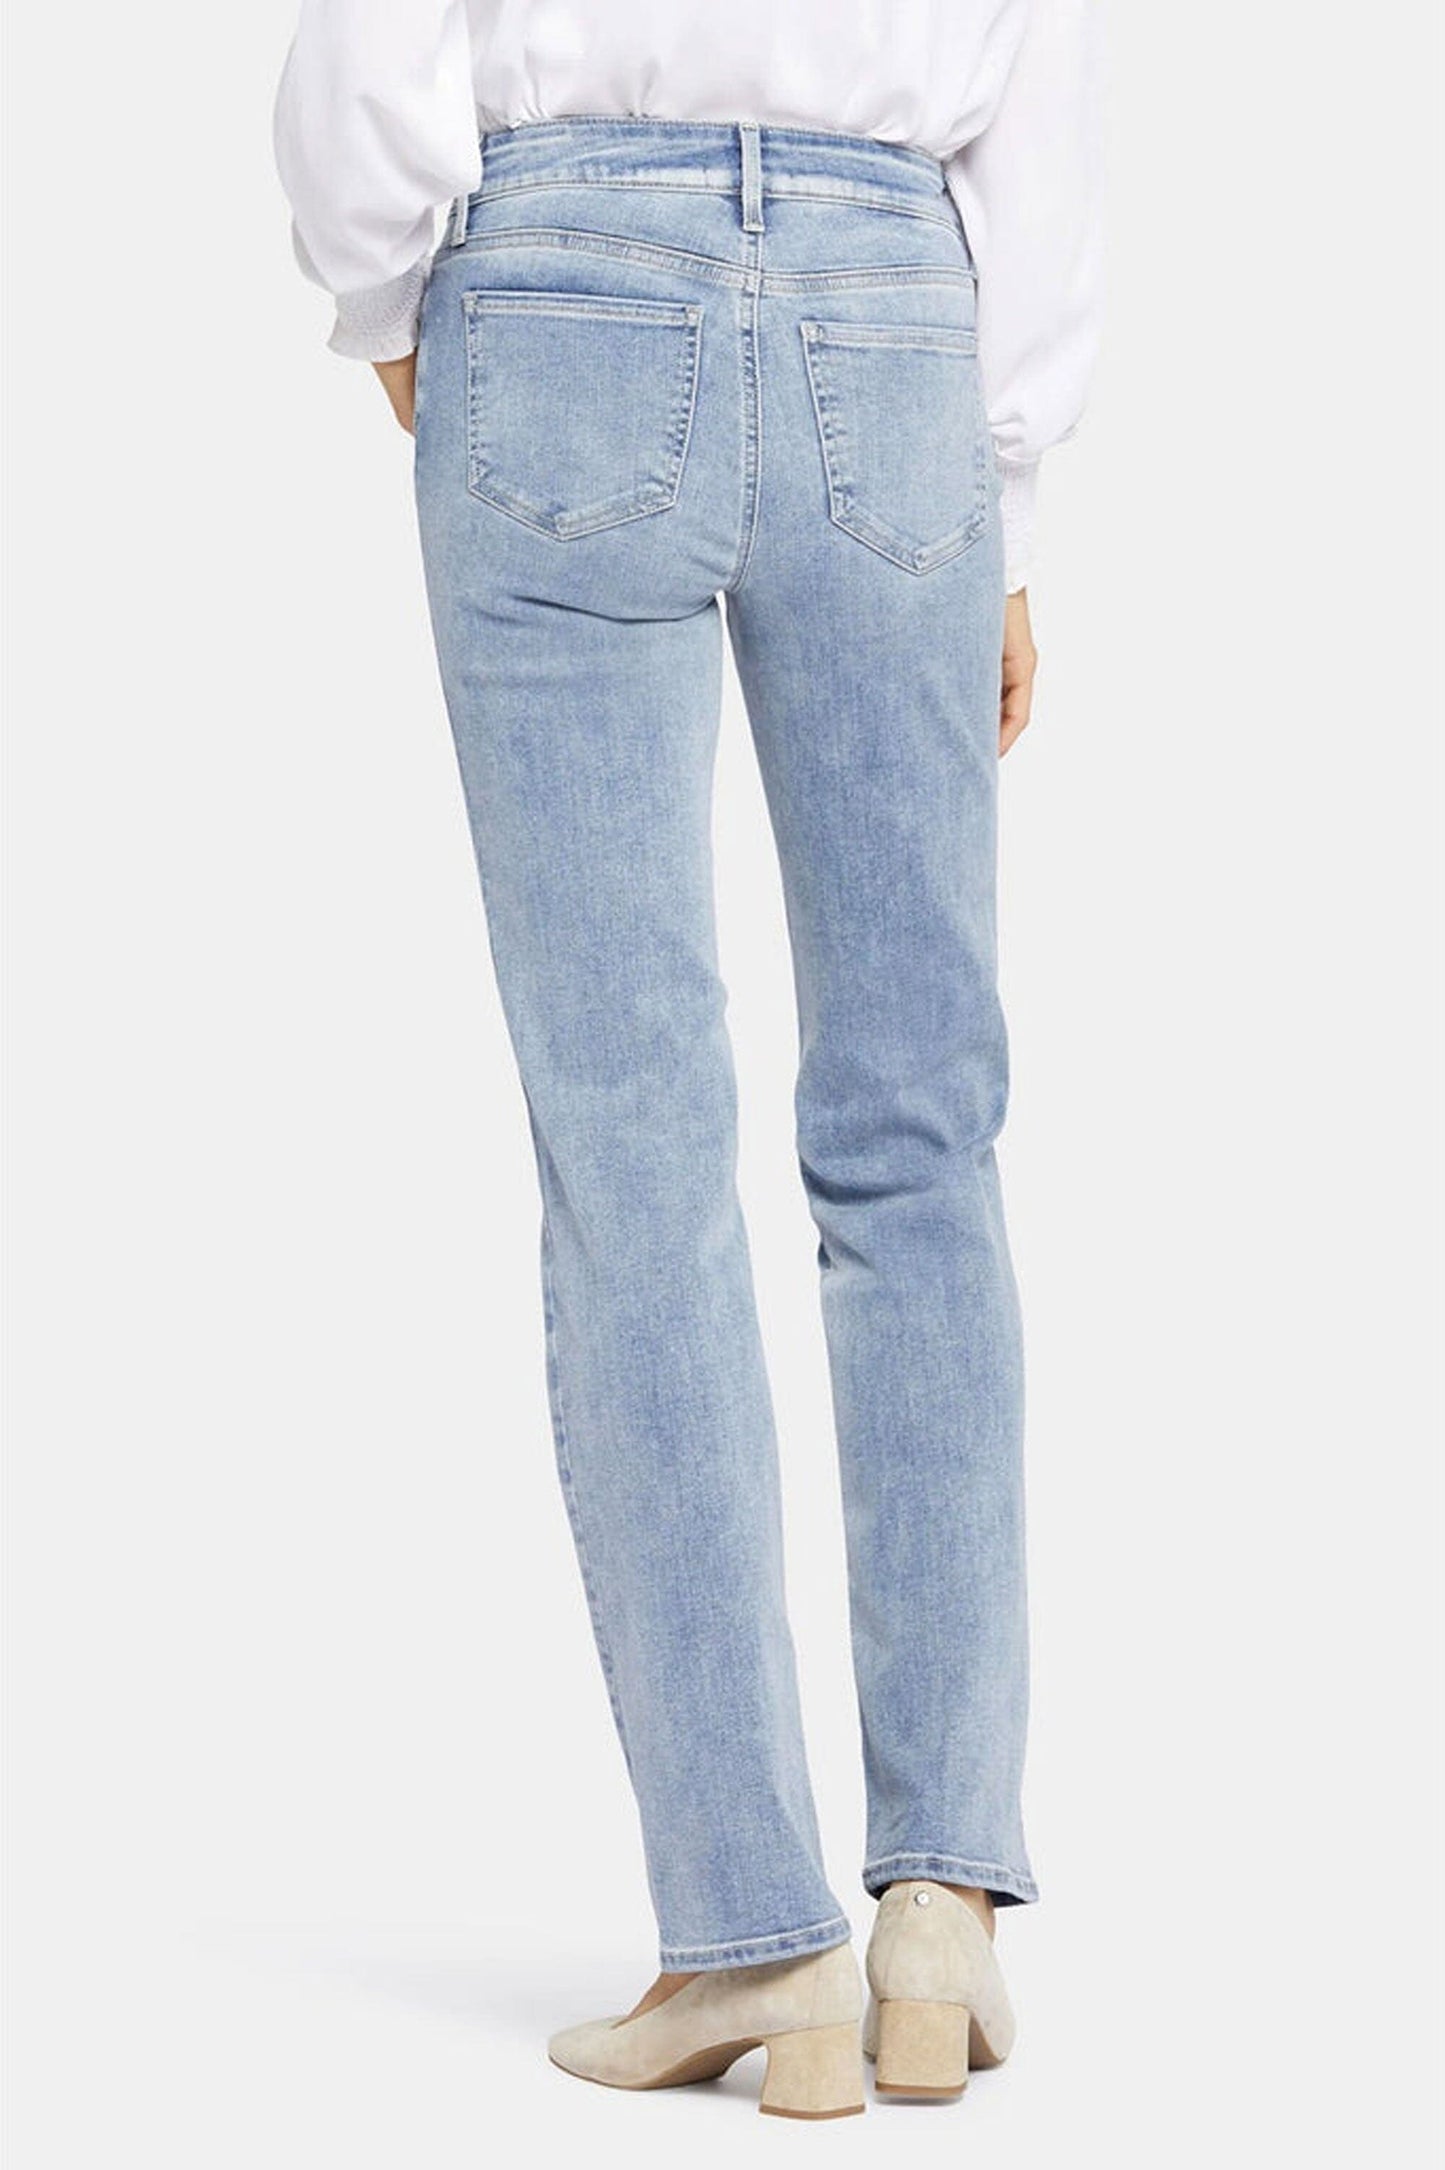 Denim & Denim Women's Regular Fit Jeans Pants Women's Denim HAS Apparel 